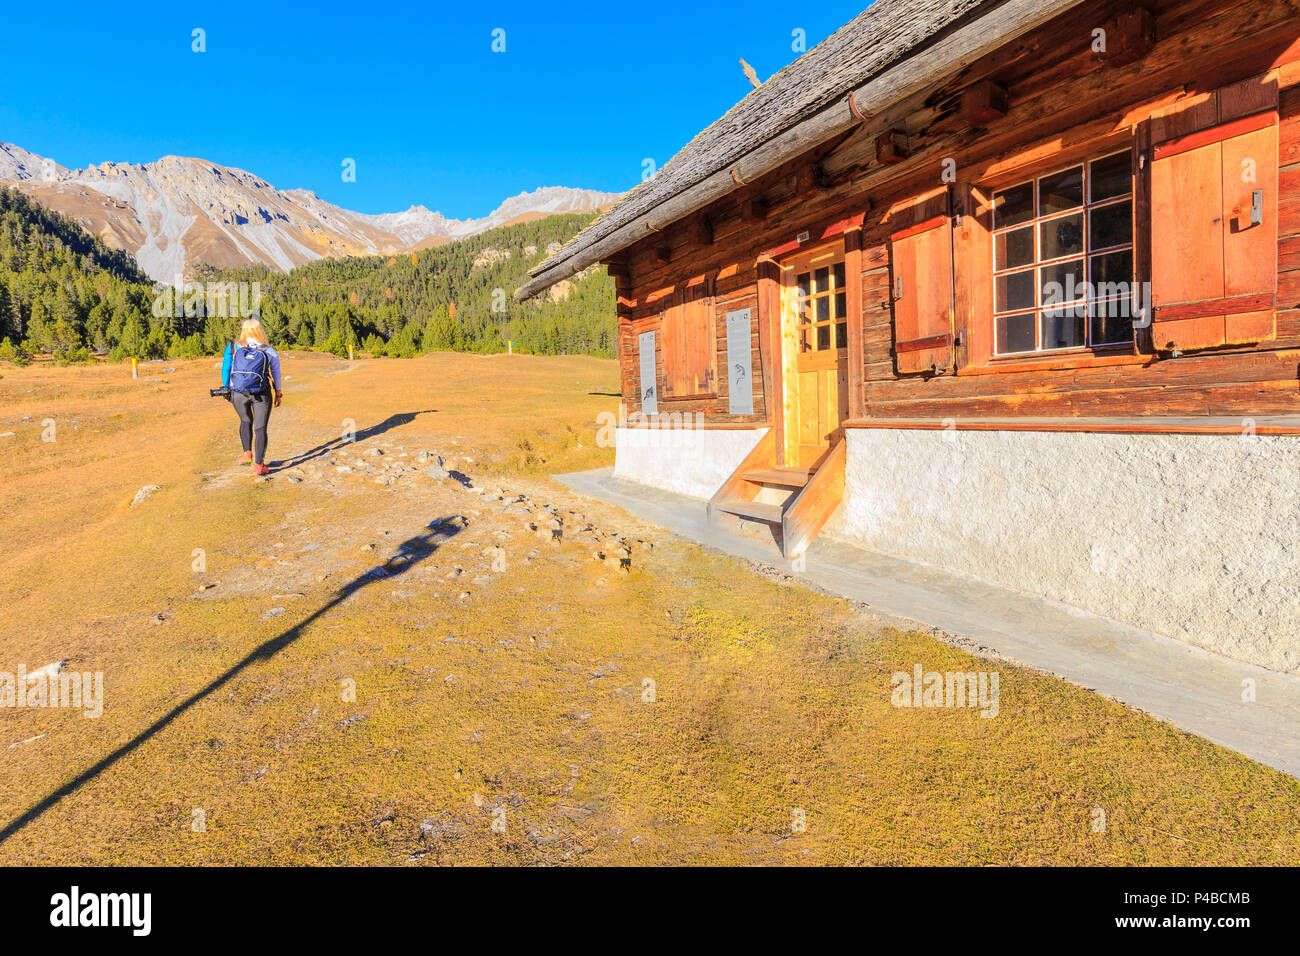 Girl walks near the House of the park at Alp Stabelchod, Pass dal Fuorn, Parc Naziunal Svizer, Engadine, Graubünden, Switzerland. Stock Photo